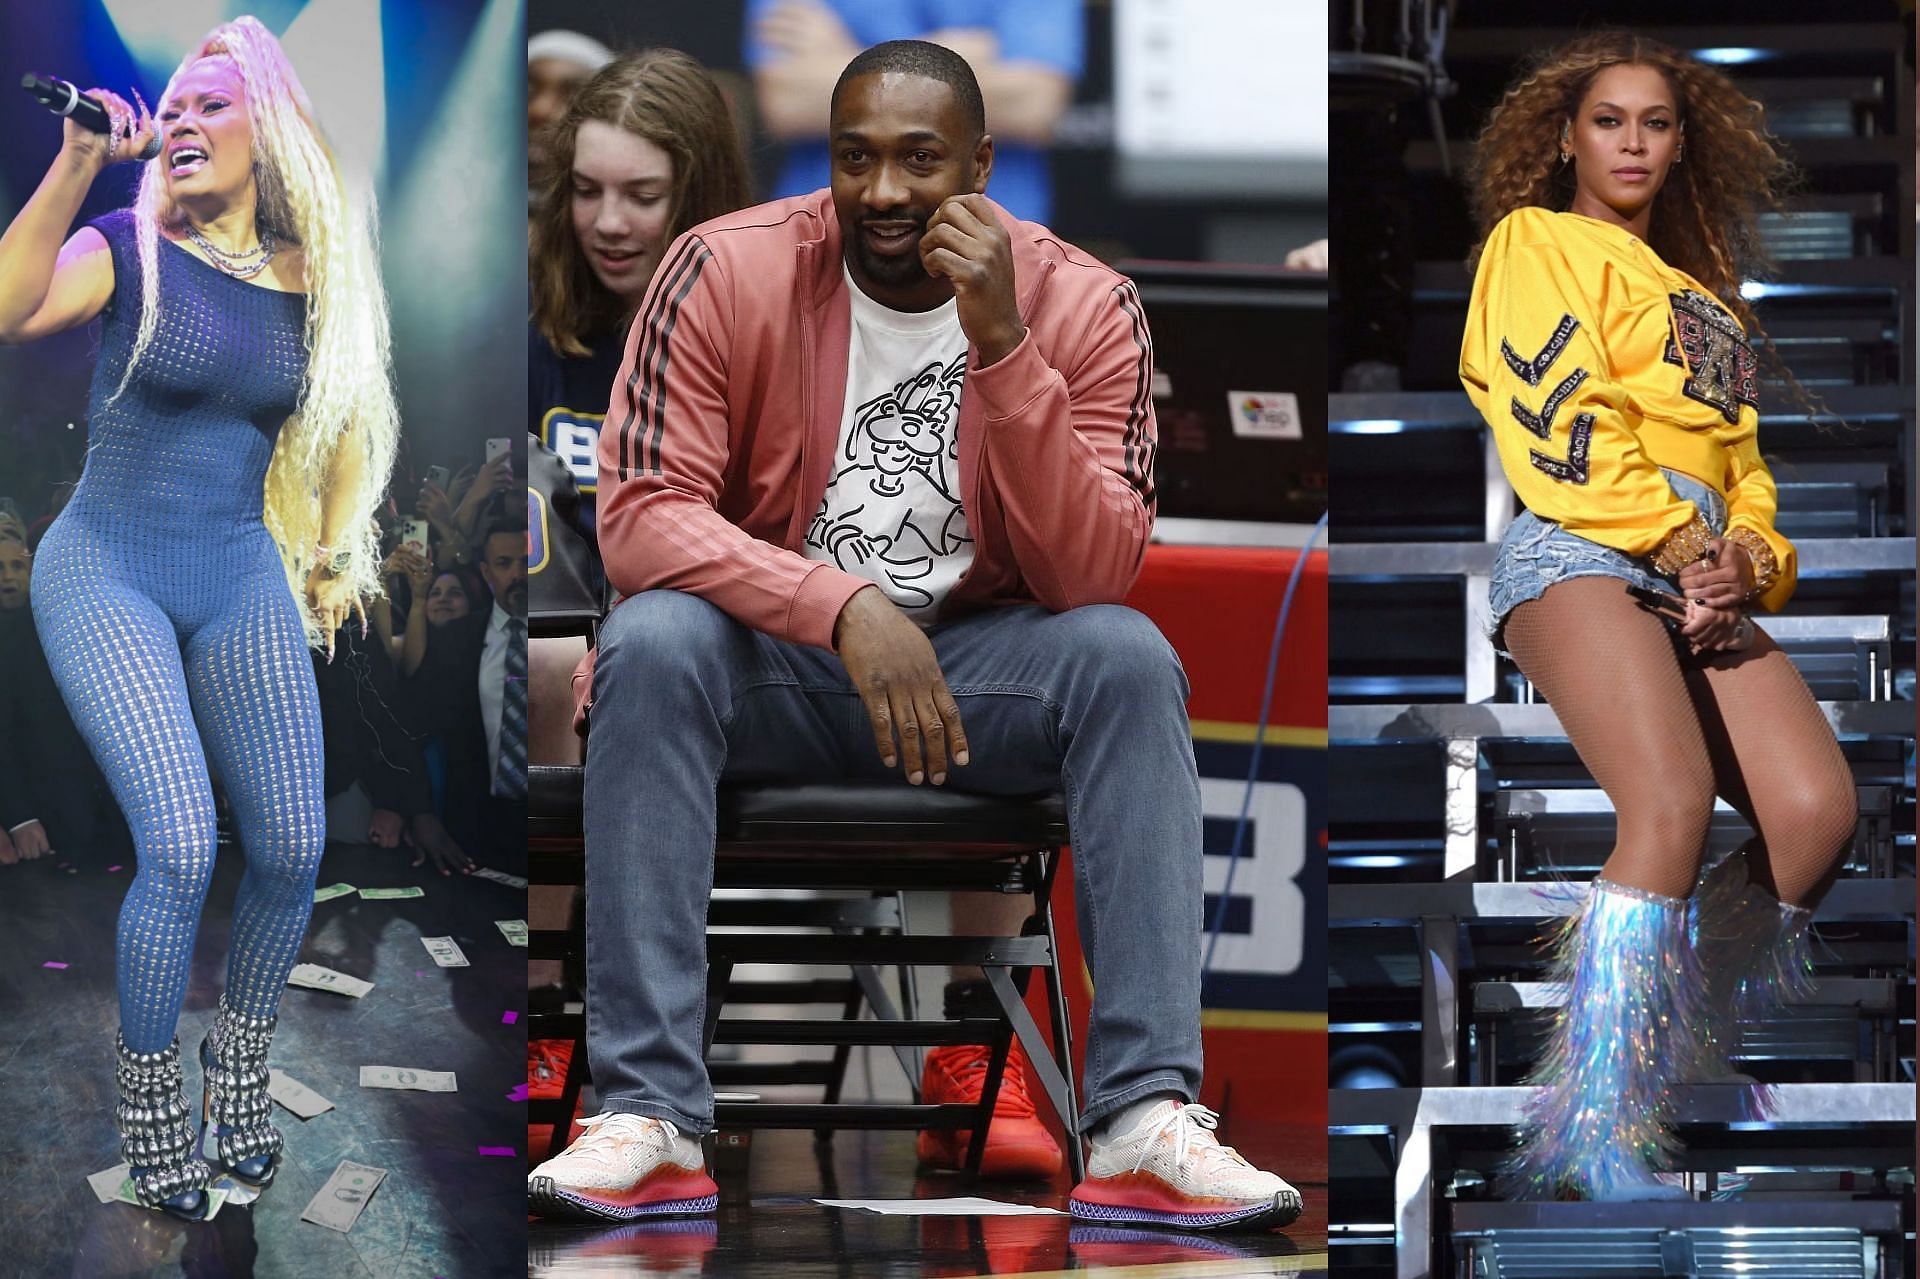 Gilbert Arenas name-drops Beyonce and Nicki Minaj as potential partners amid getting slammed by NBA players